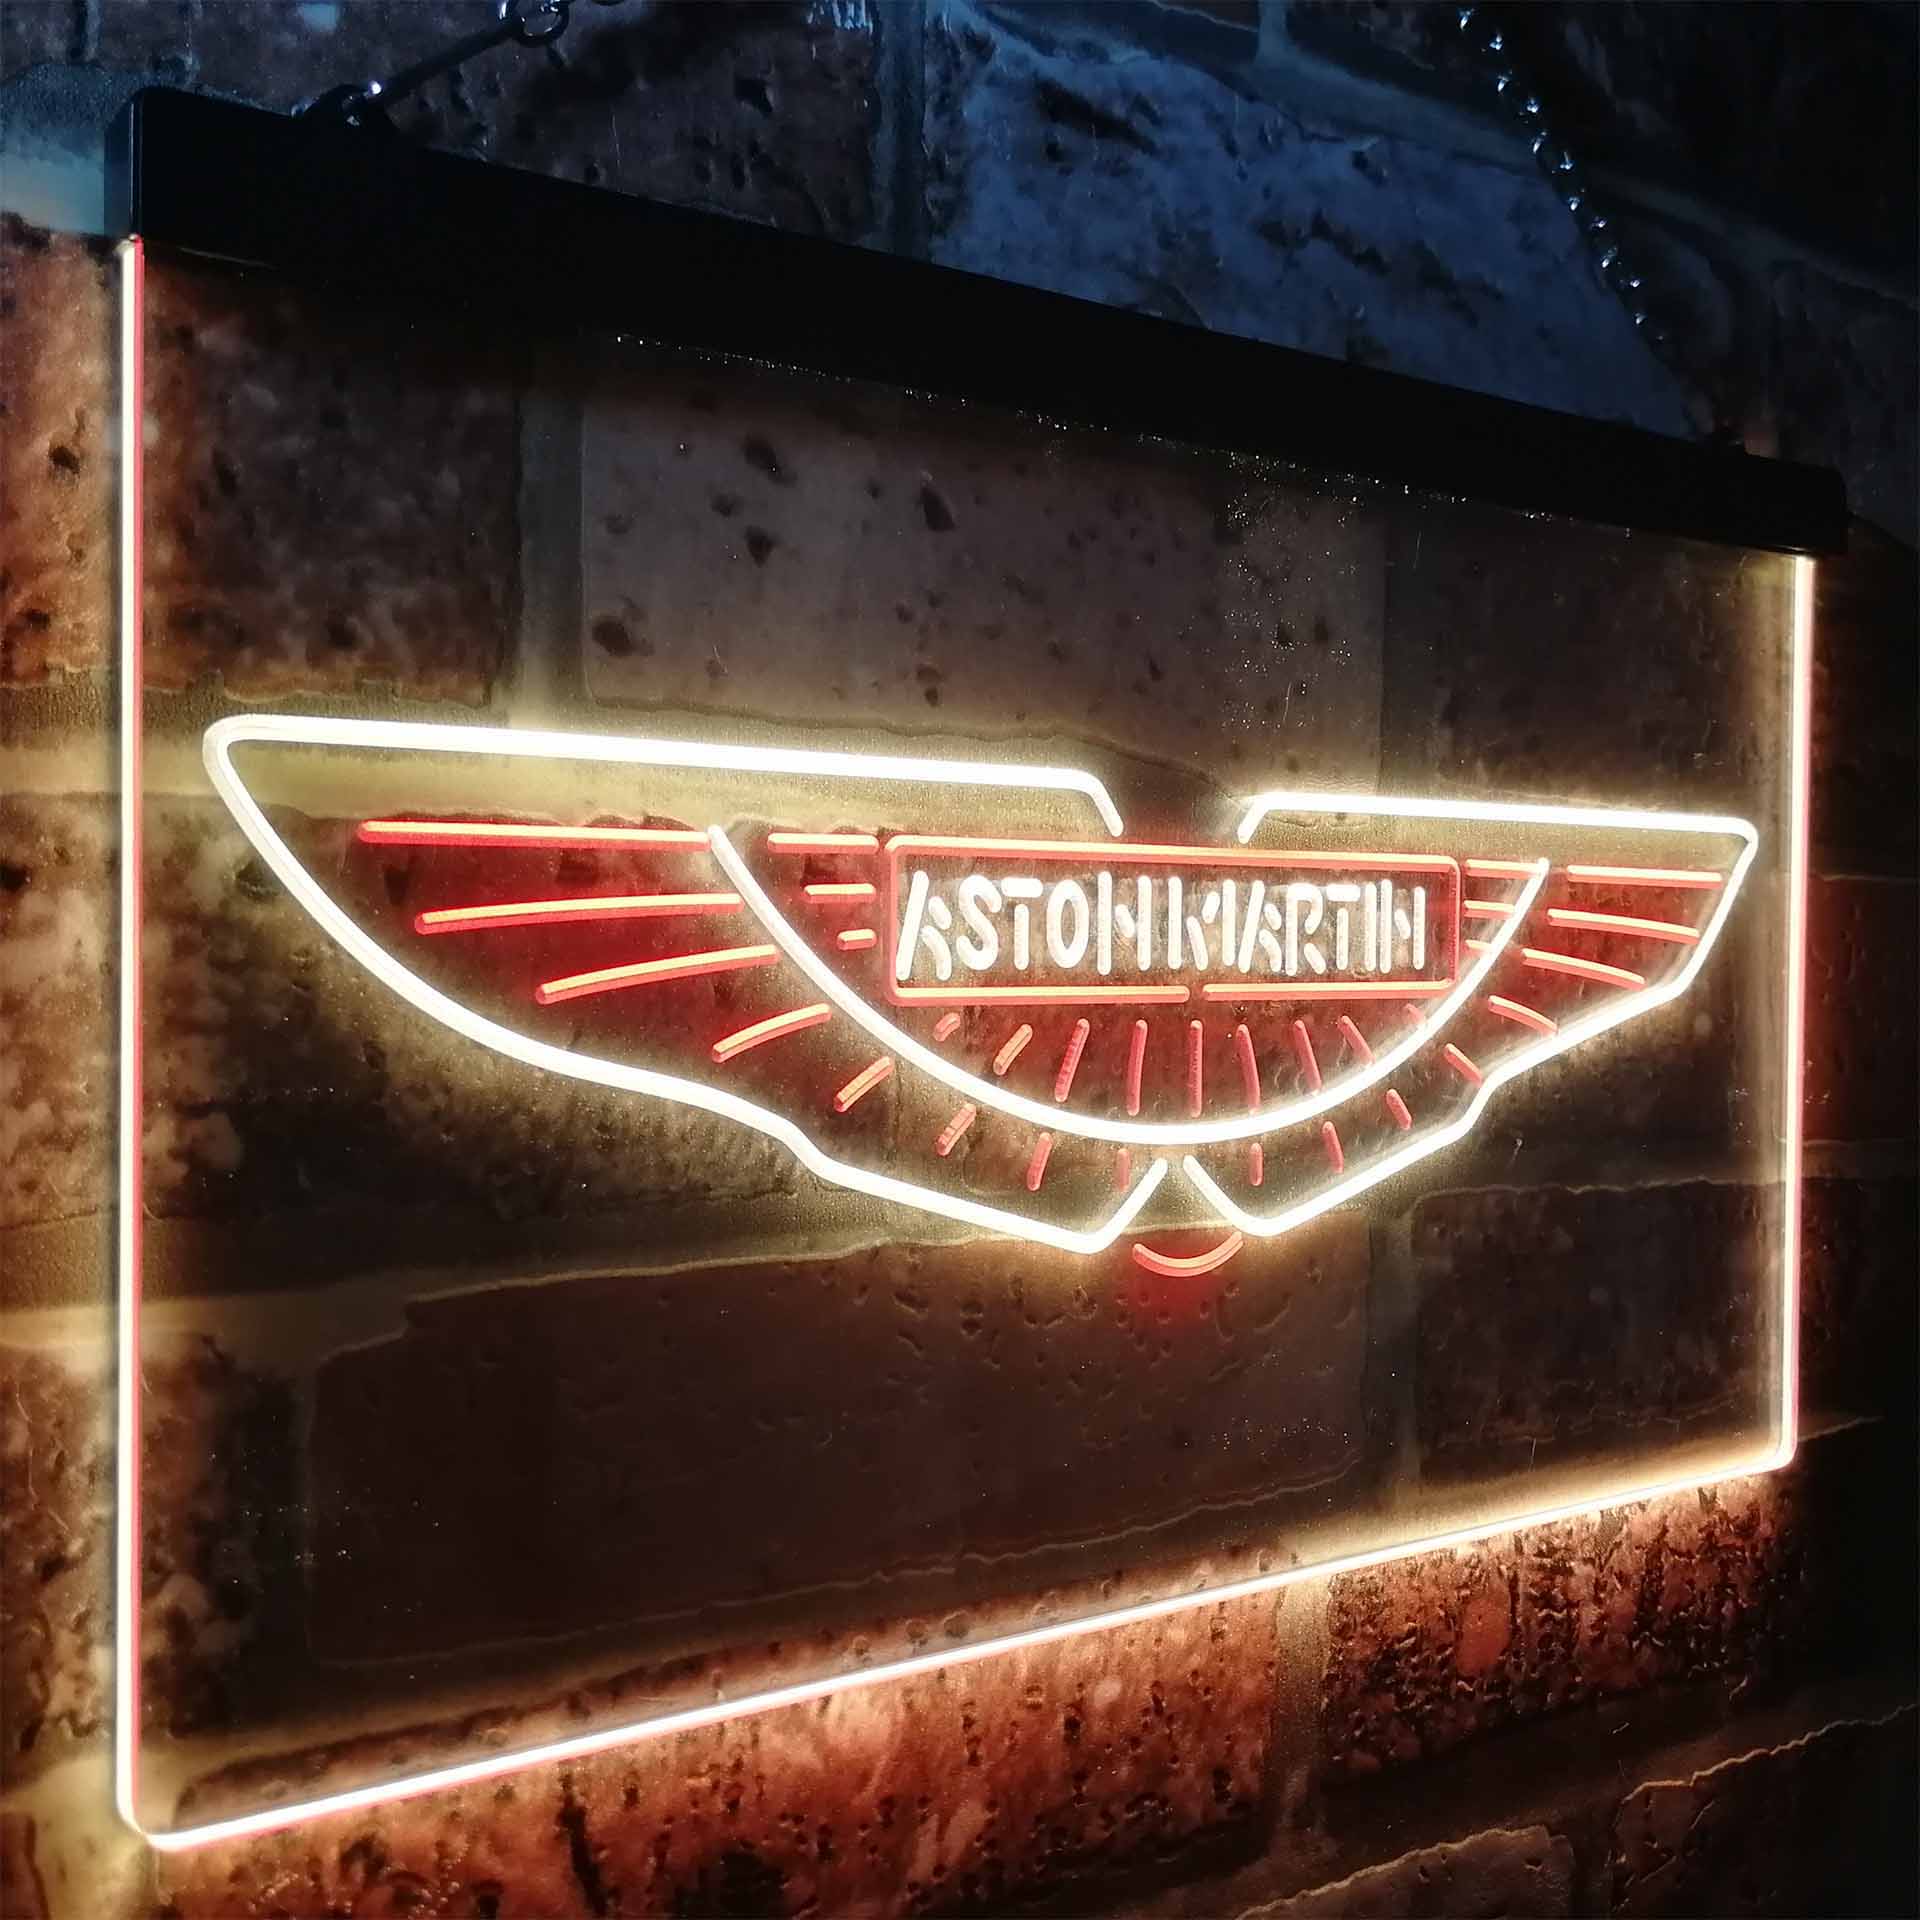 Aston Martin Sport Car Garage LED Neon Sign